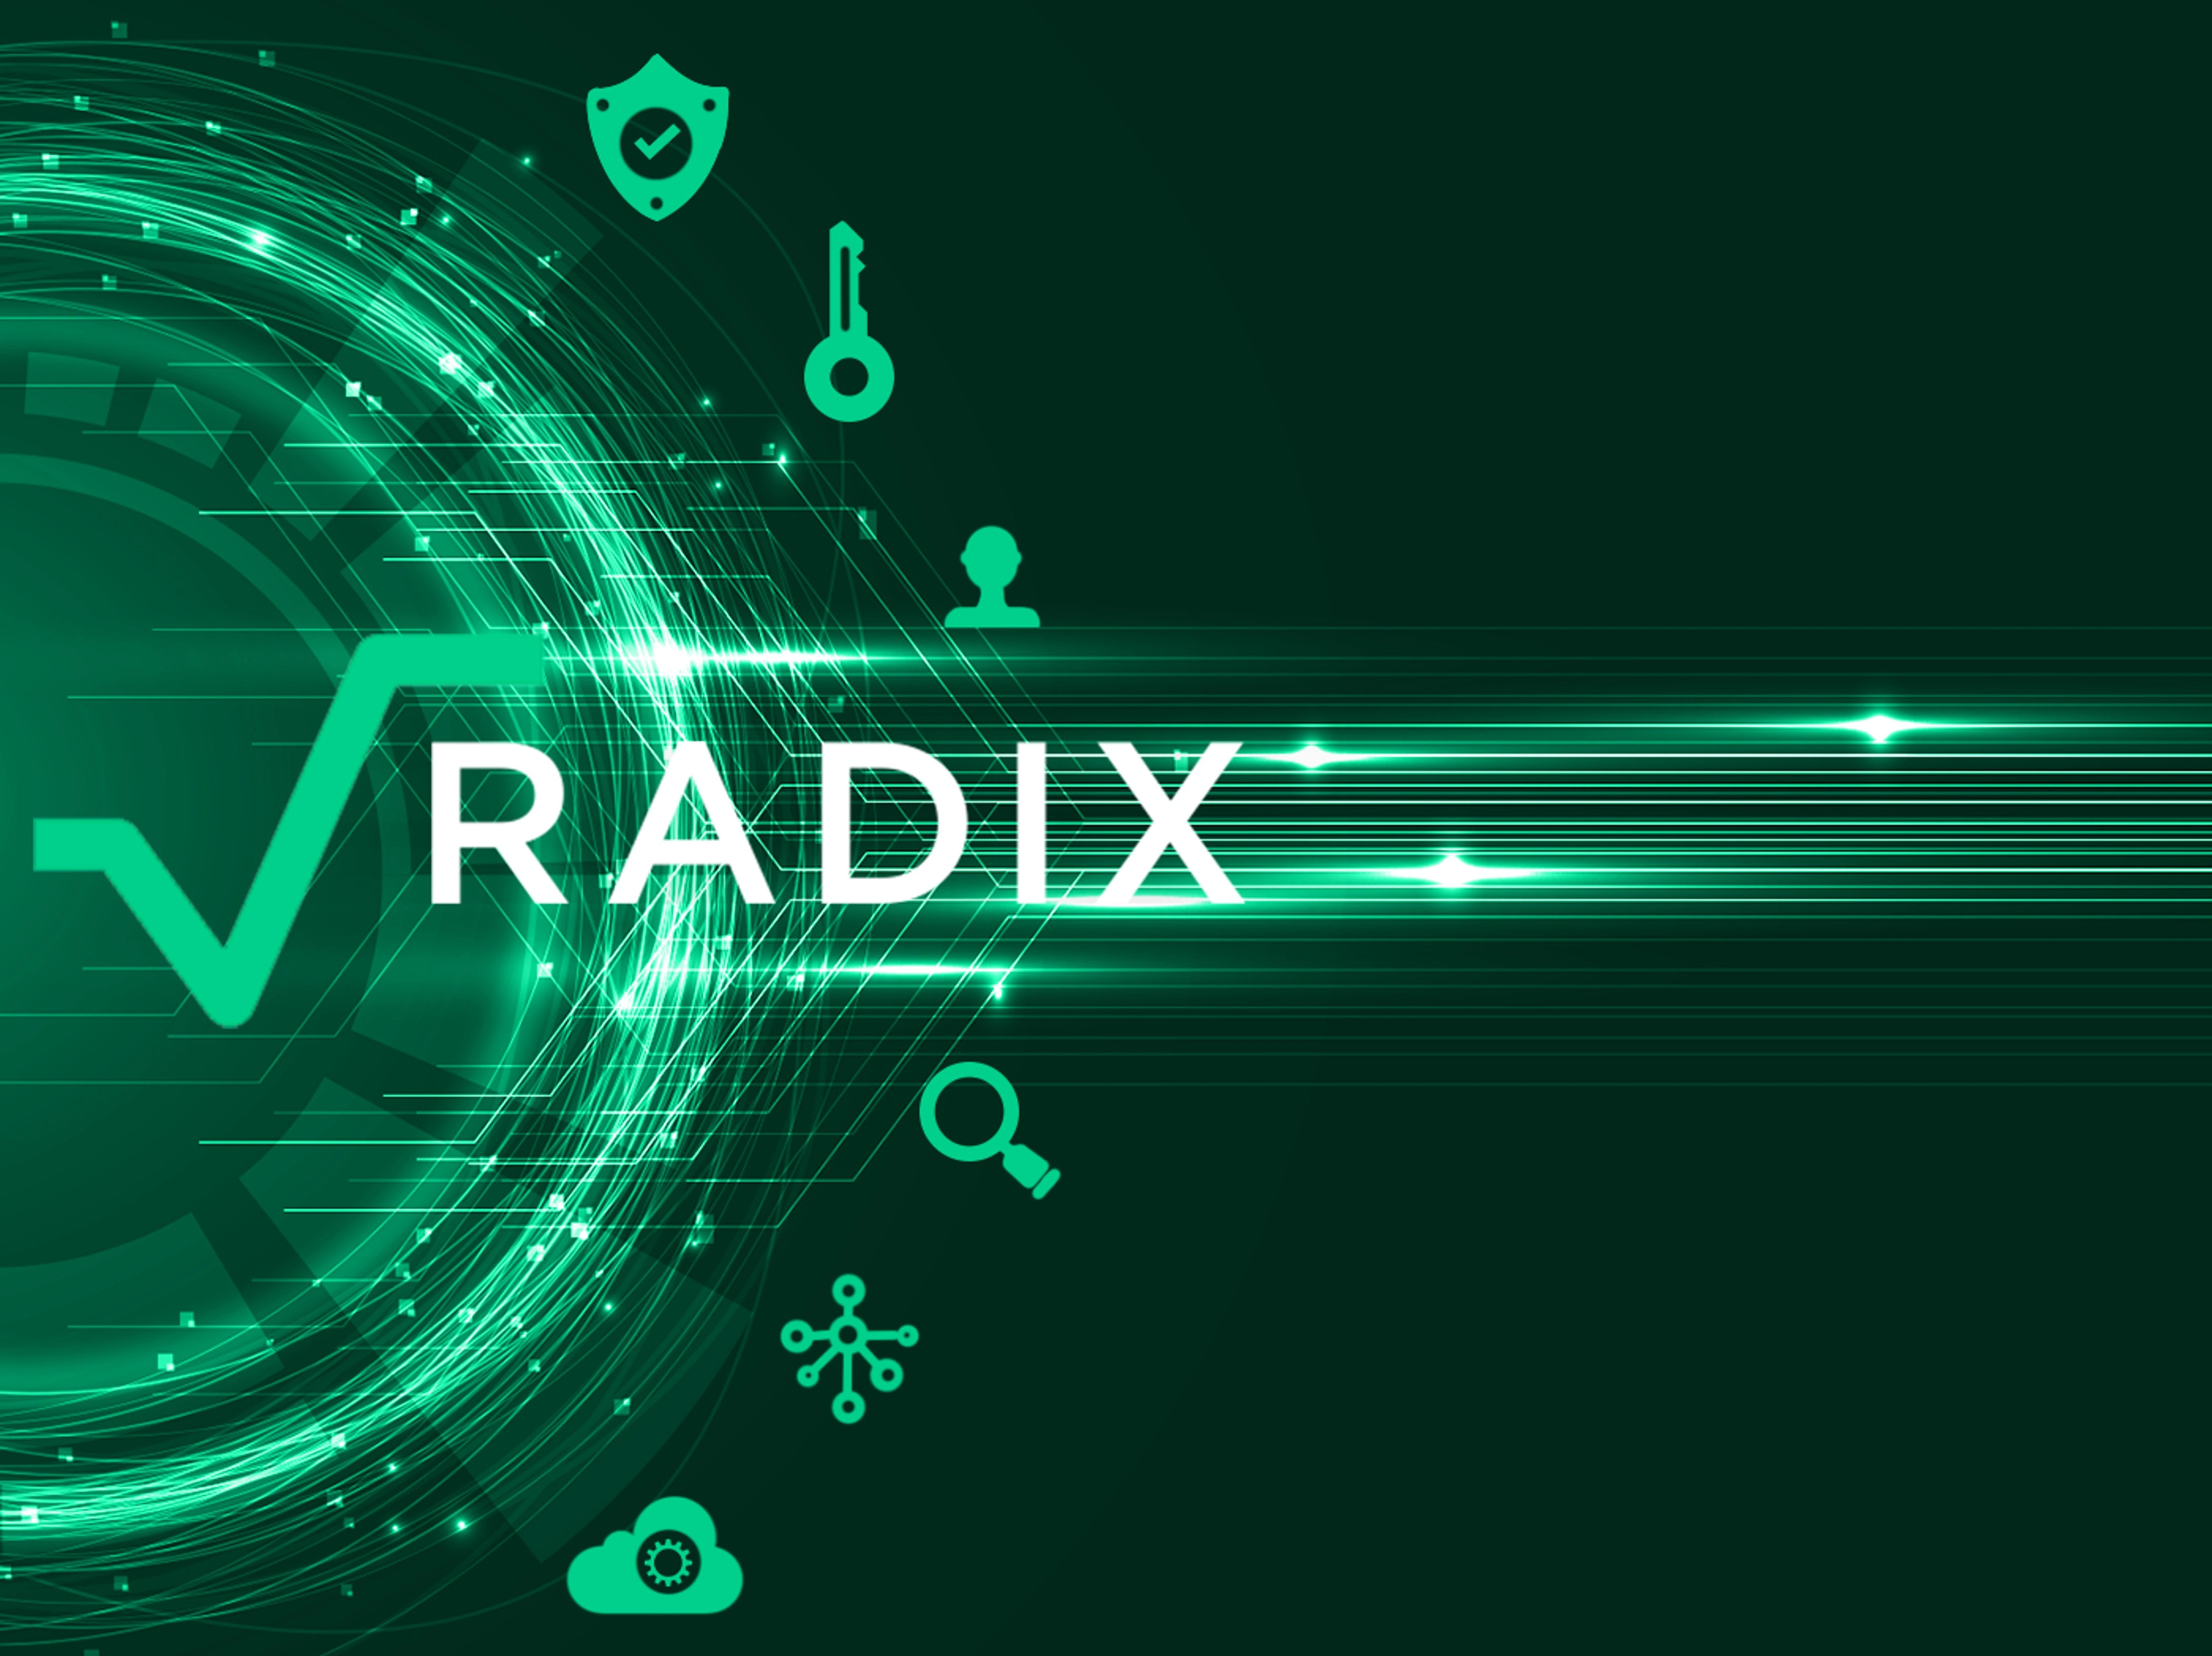 e-Radix